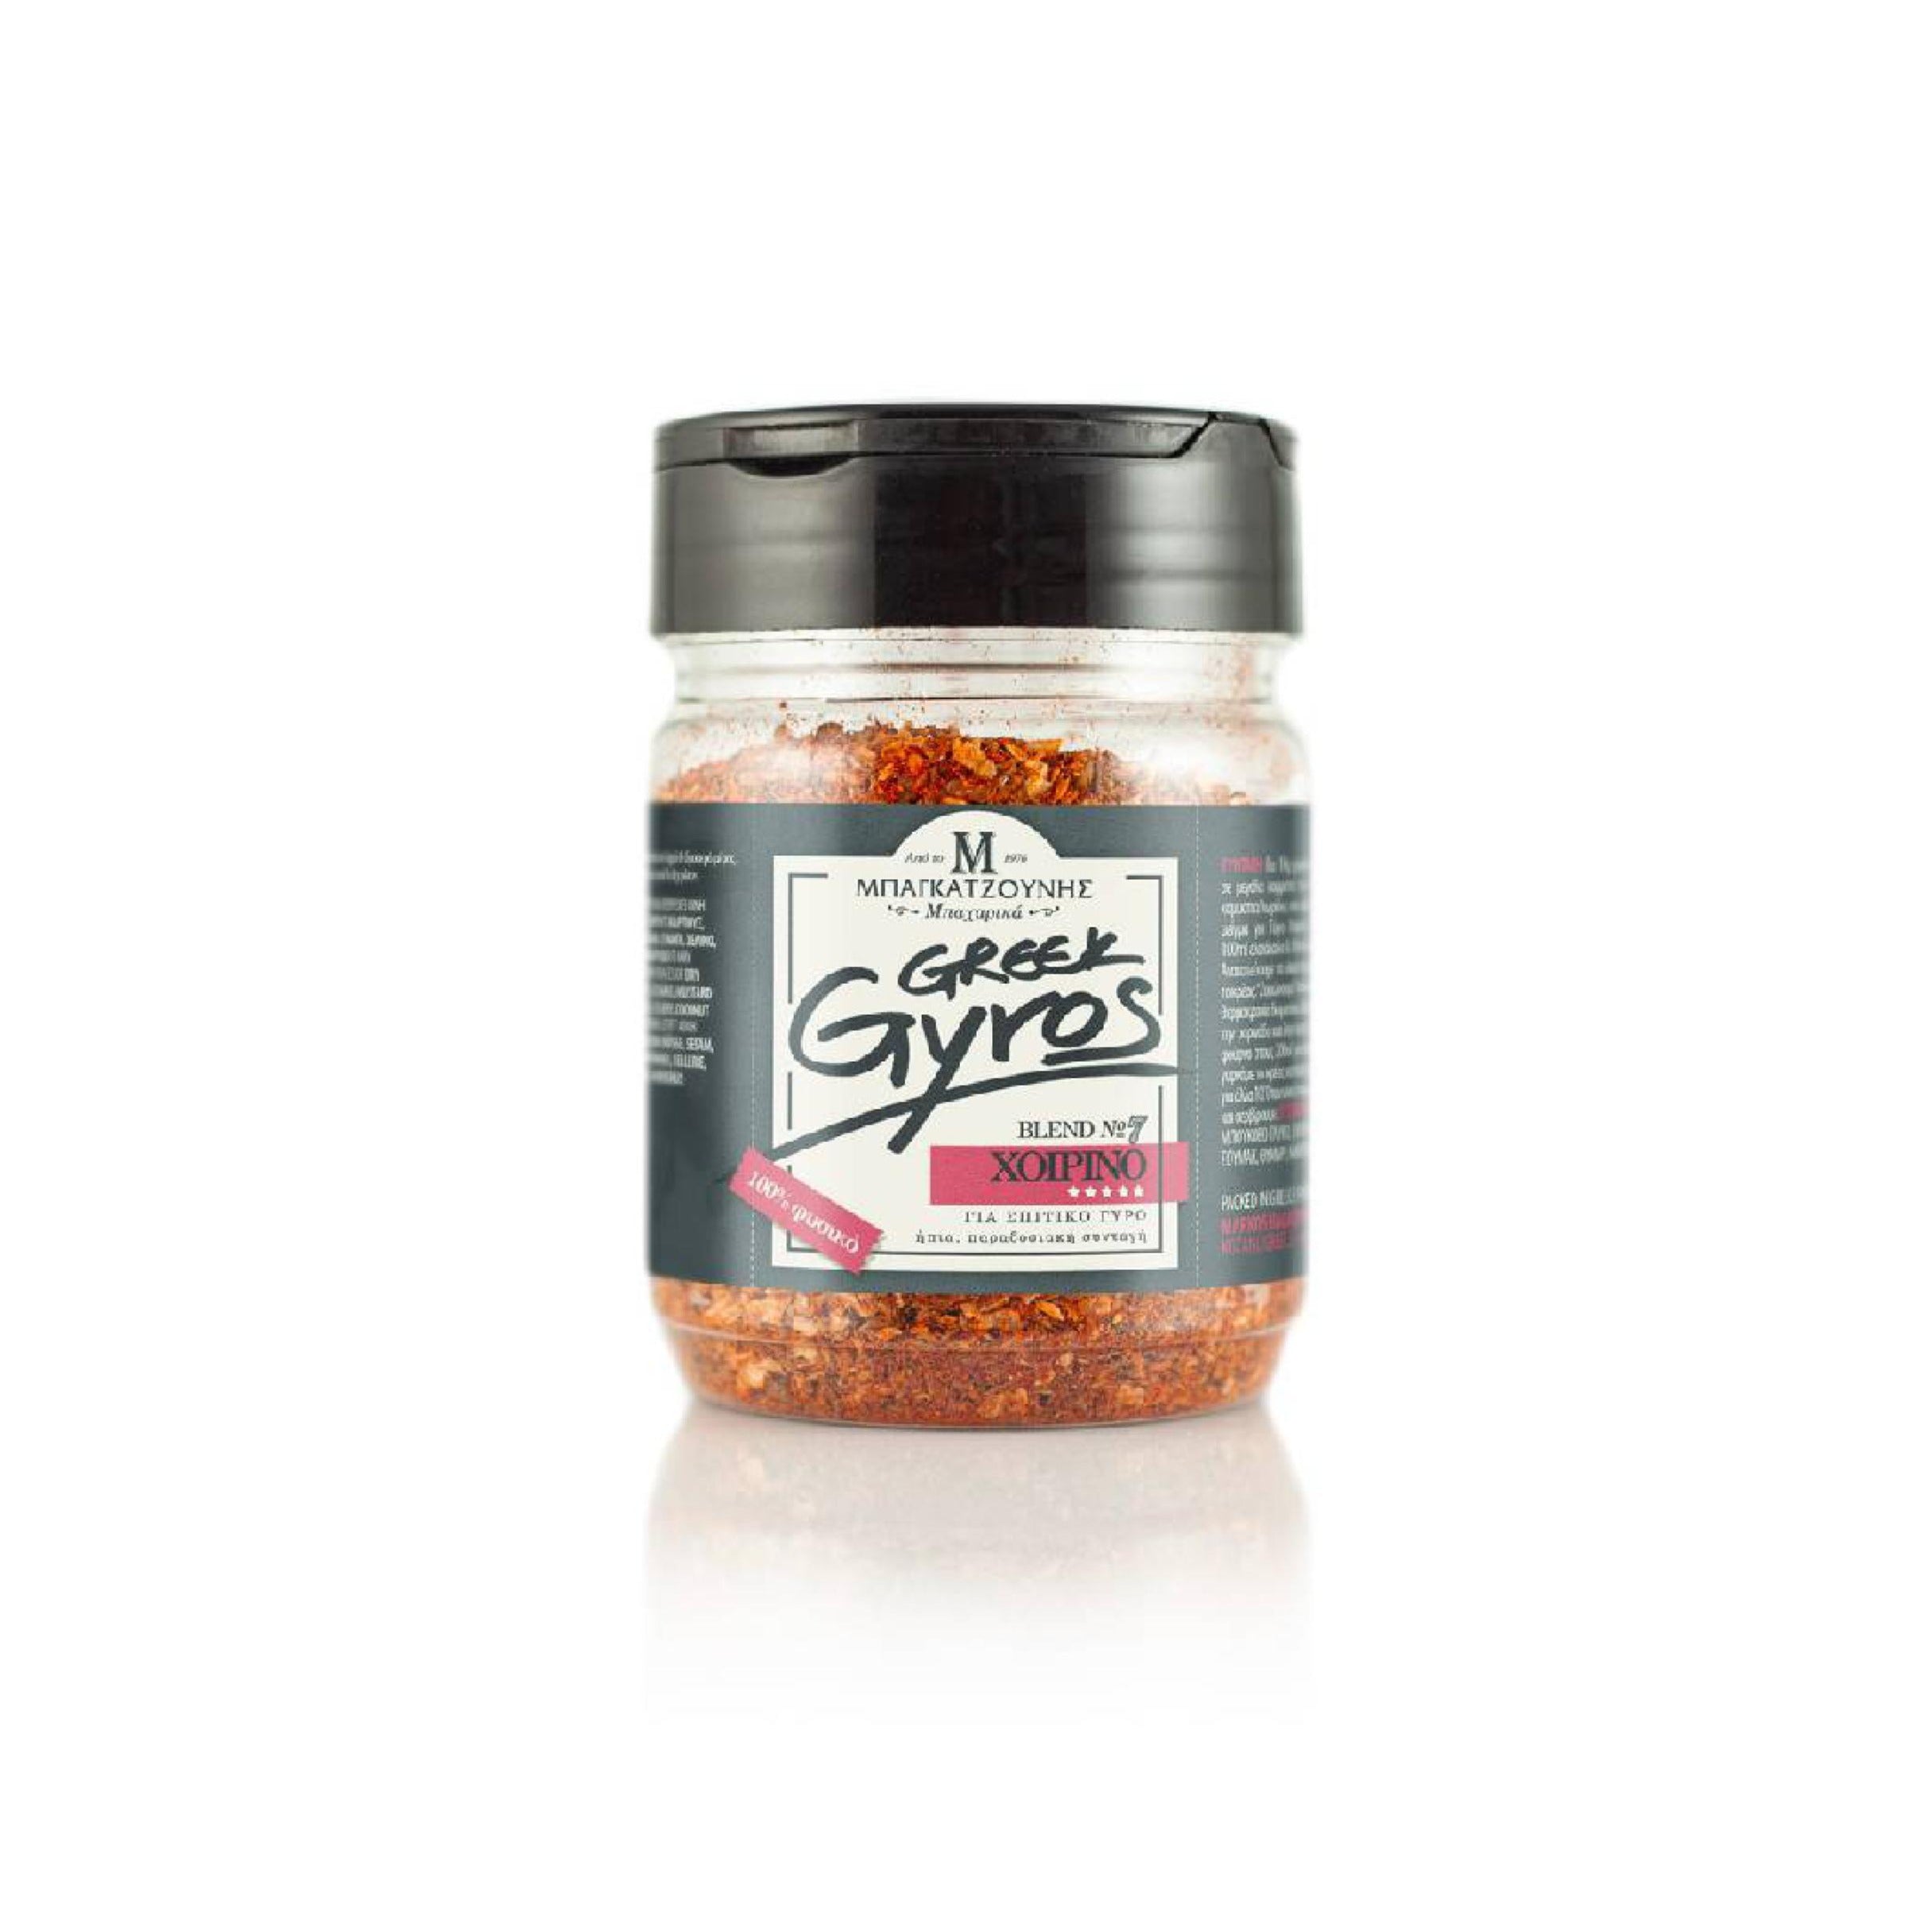 Gyros Spice Mix - Pork